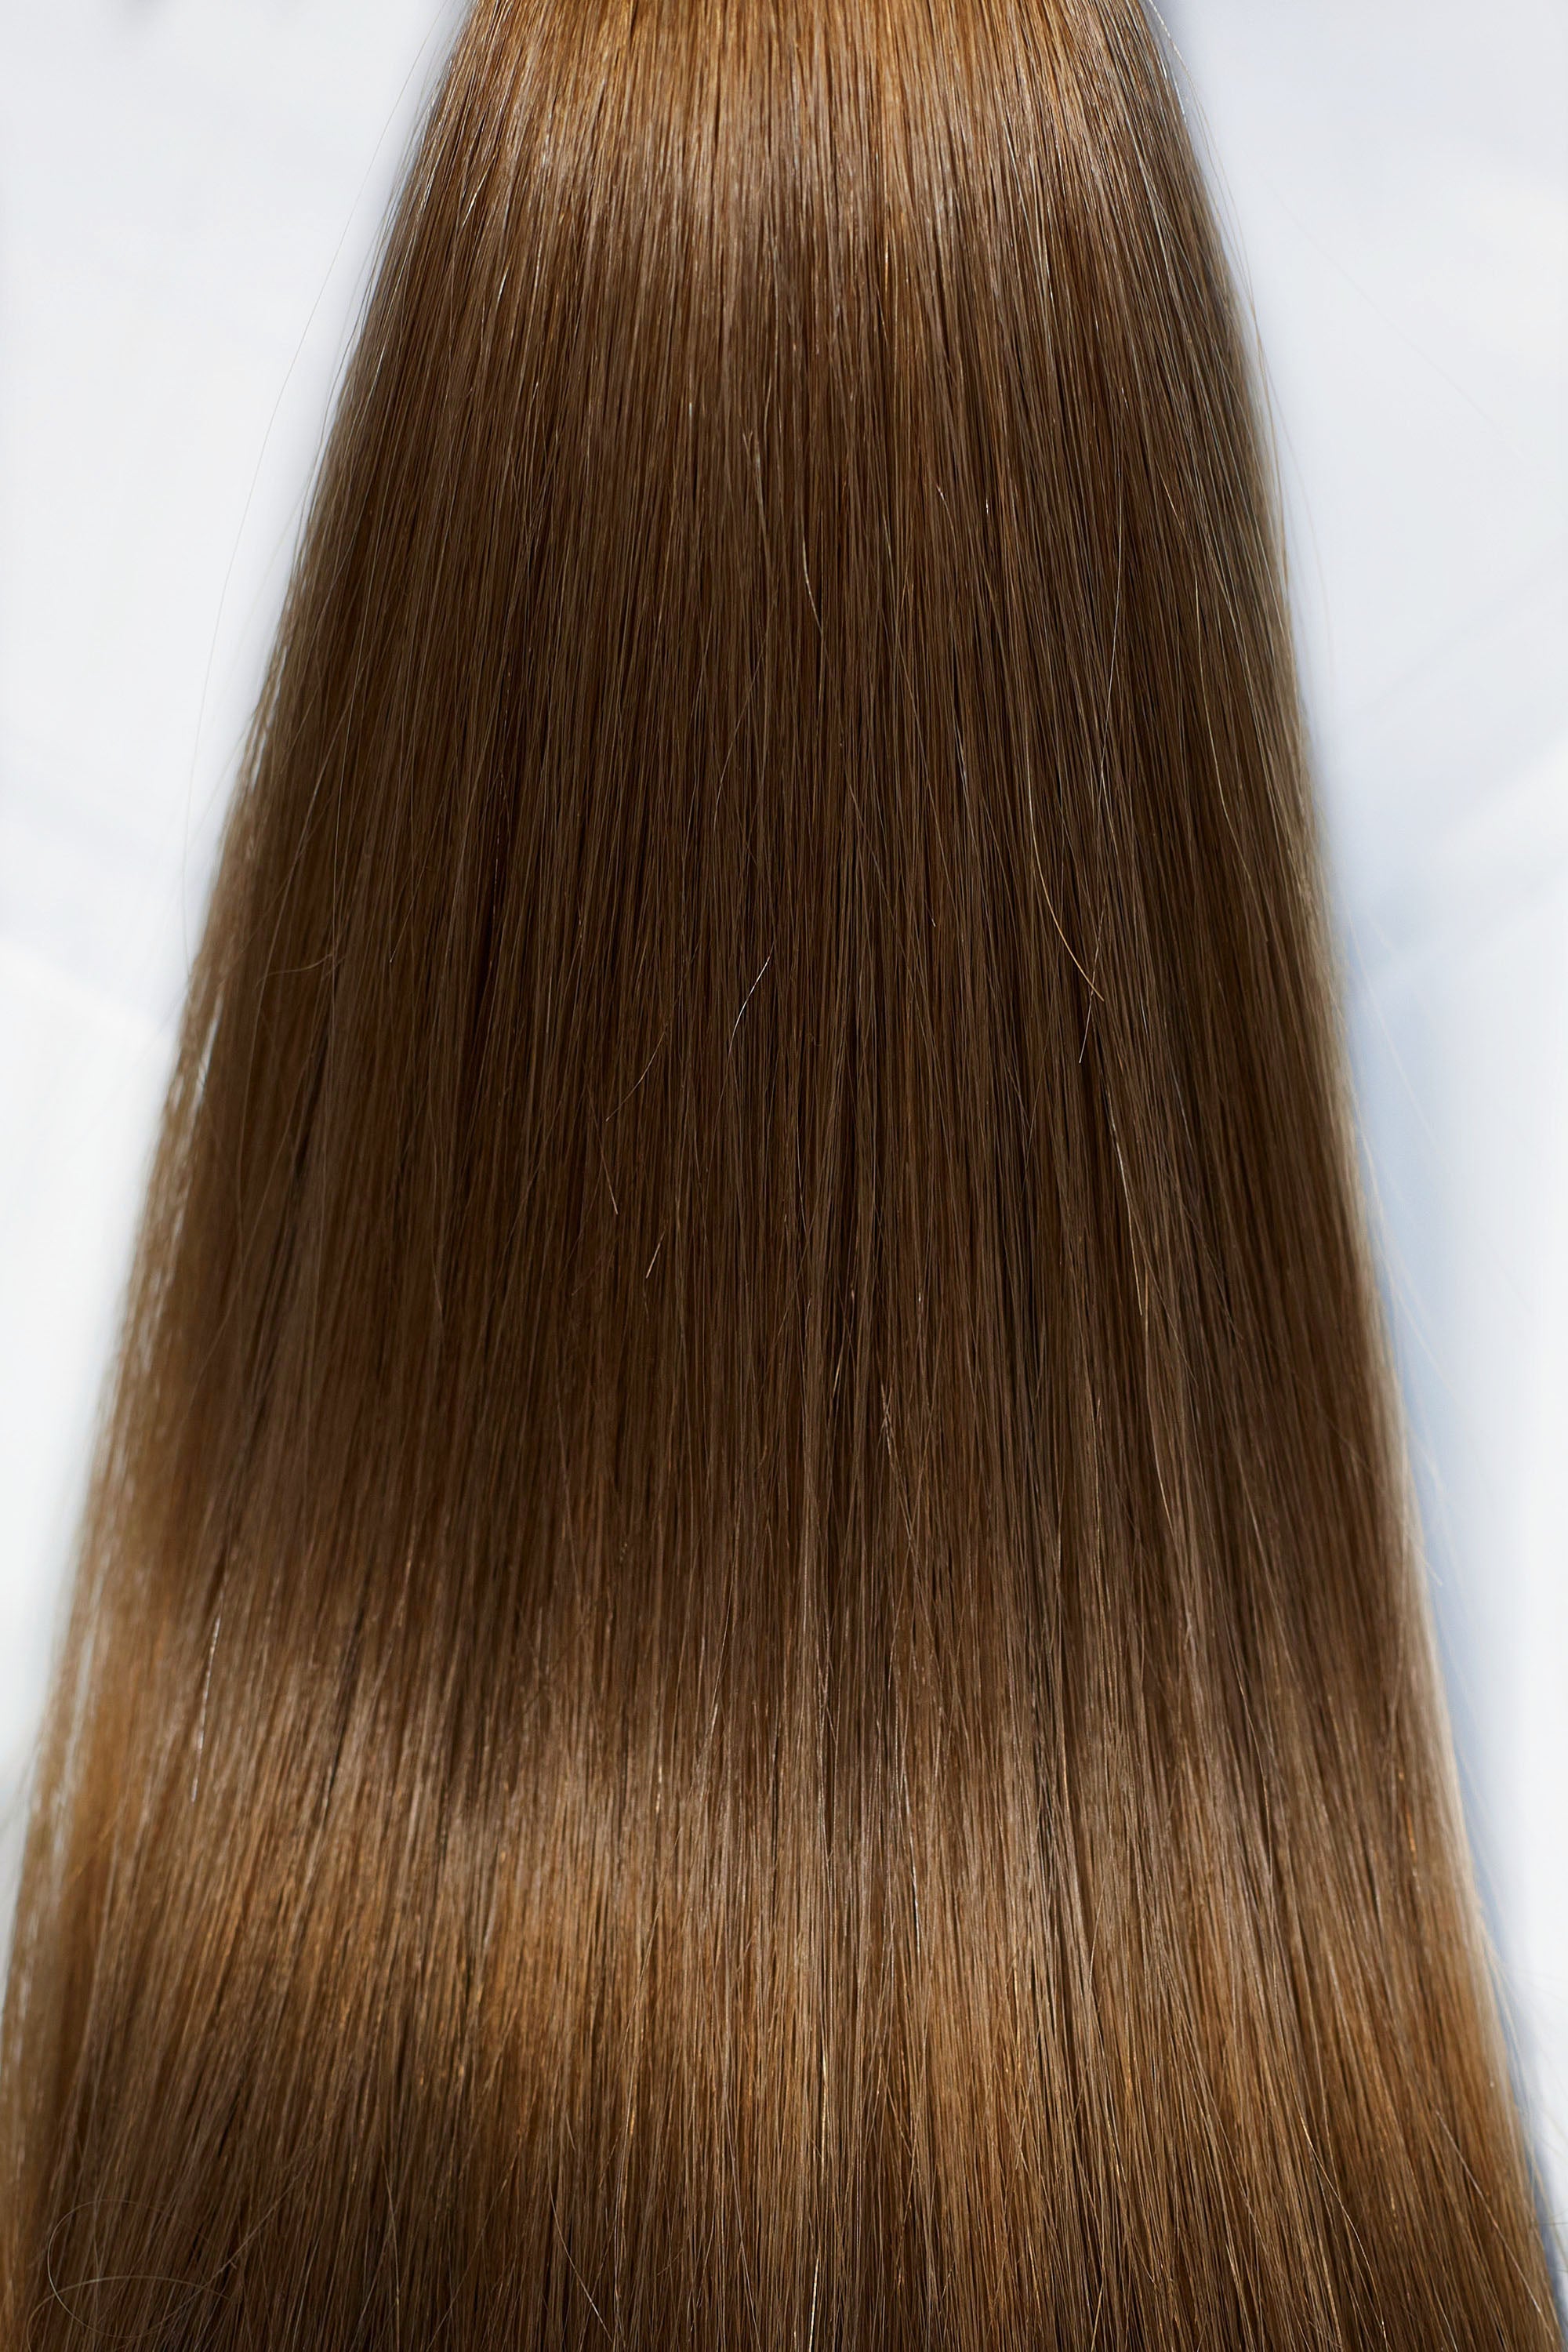 Behair professional Keratin Tip "Premium" 26" (65cm) Natural Straight Chestnut #6 - 25g (Micro - 0.5g each pcs) hair extensions